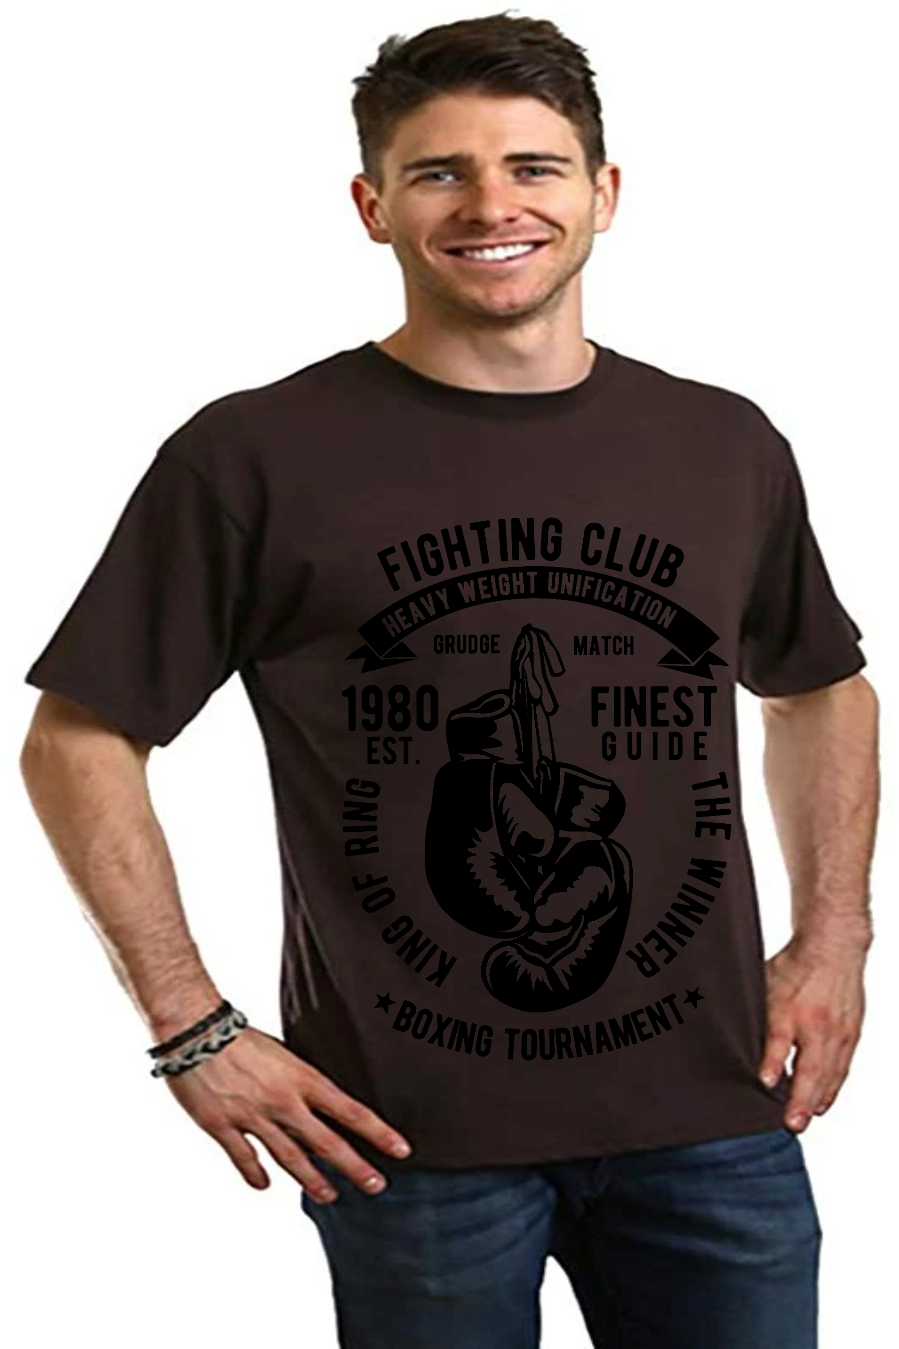 Fighting Club Men's Bamboo Viscose/Organic Cotton Short Sleeve T-Shirt - Spun Bamboo